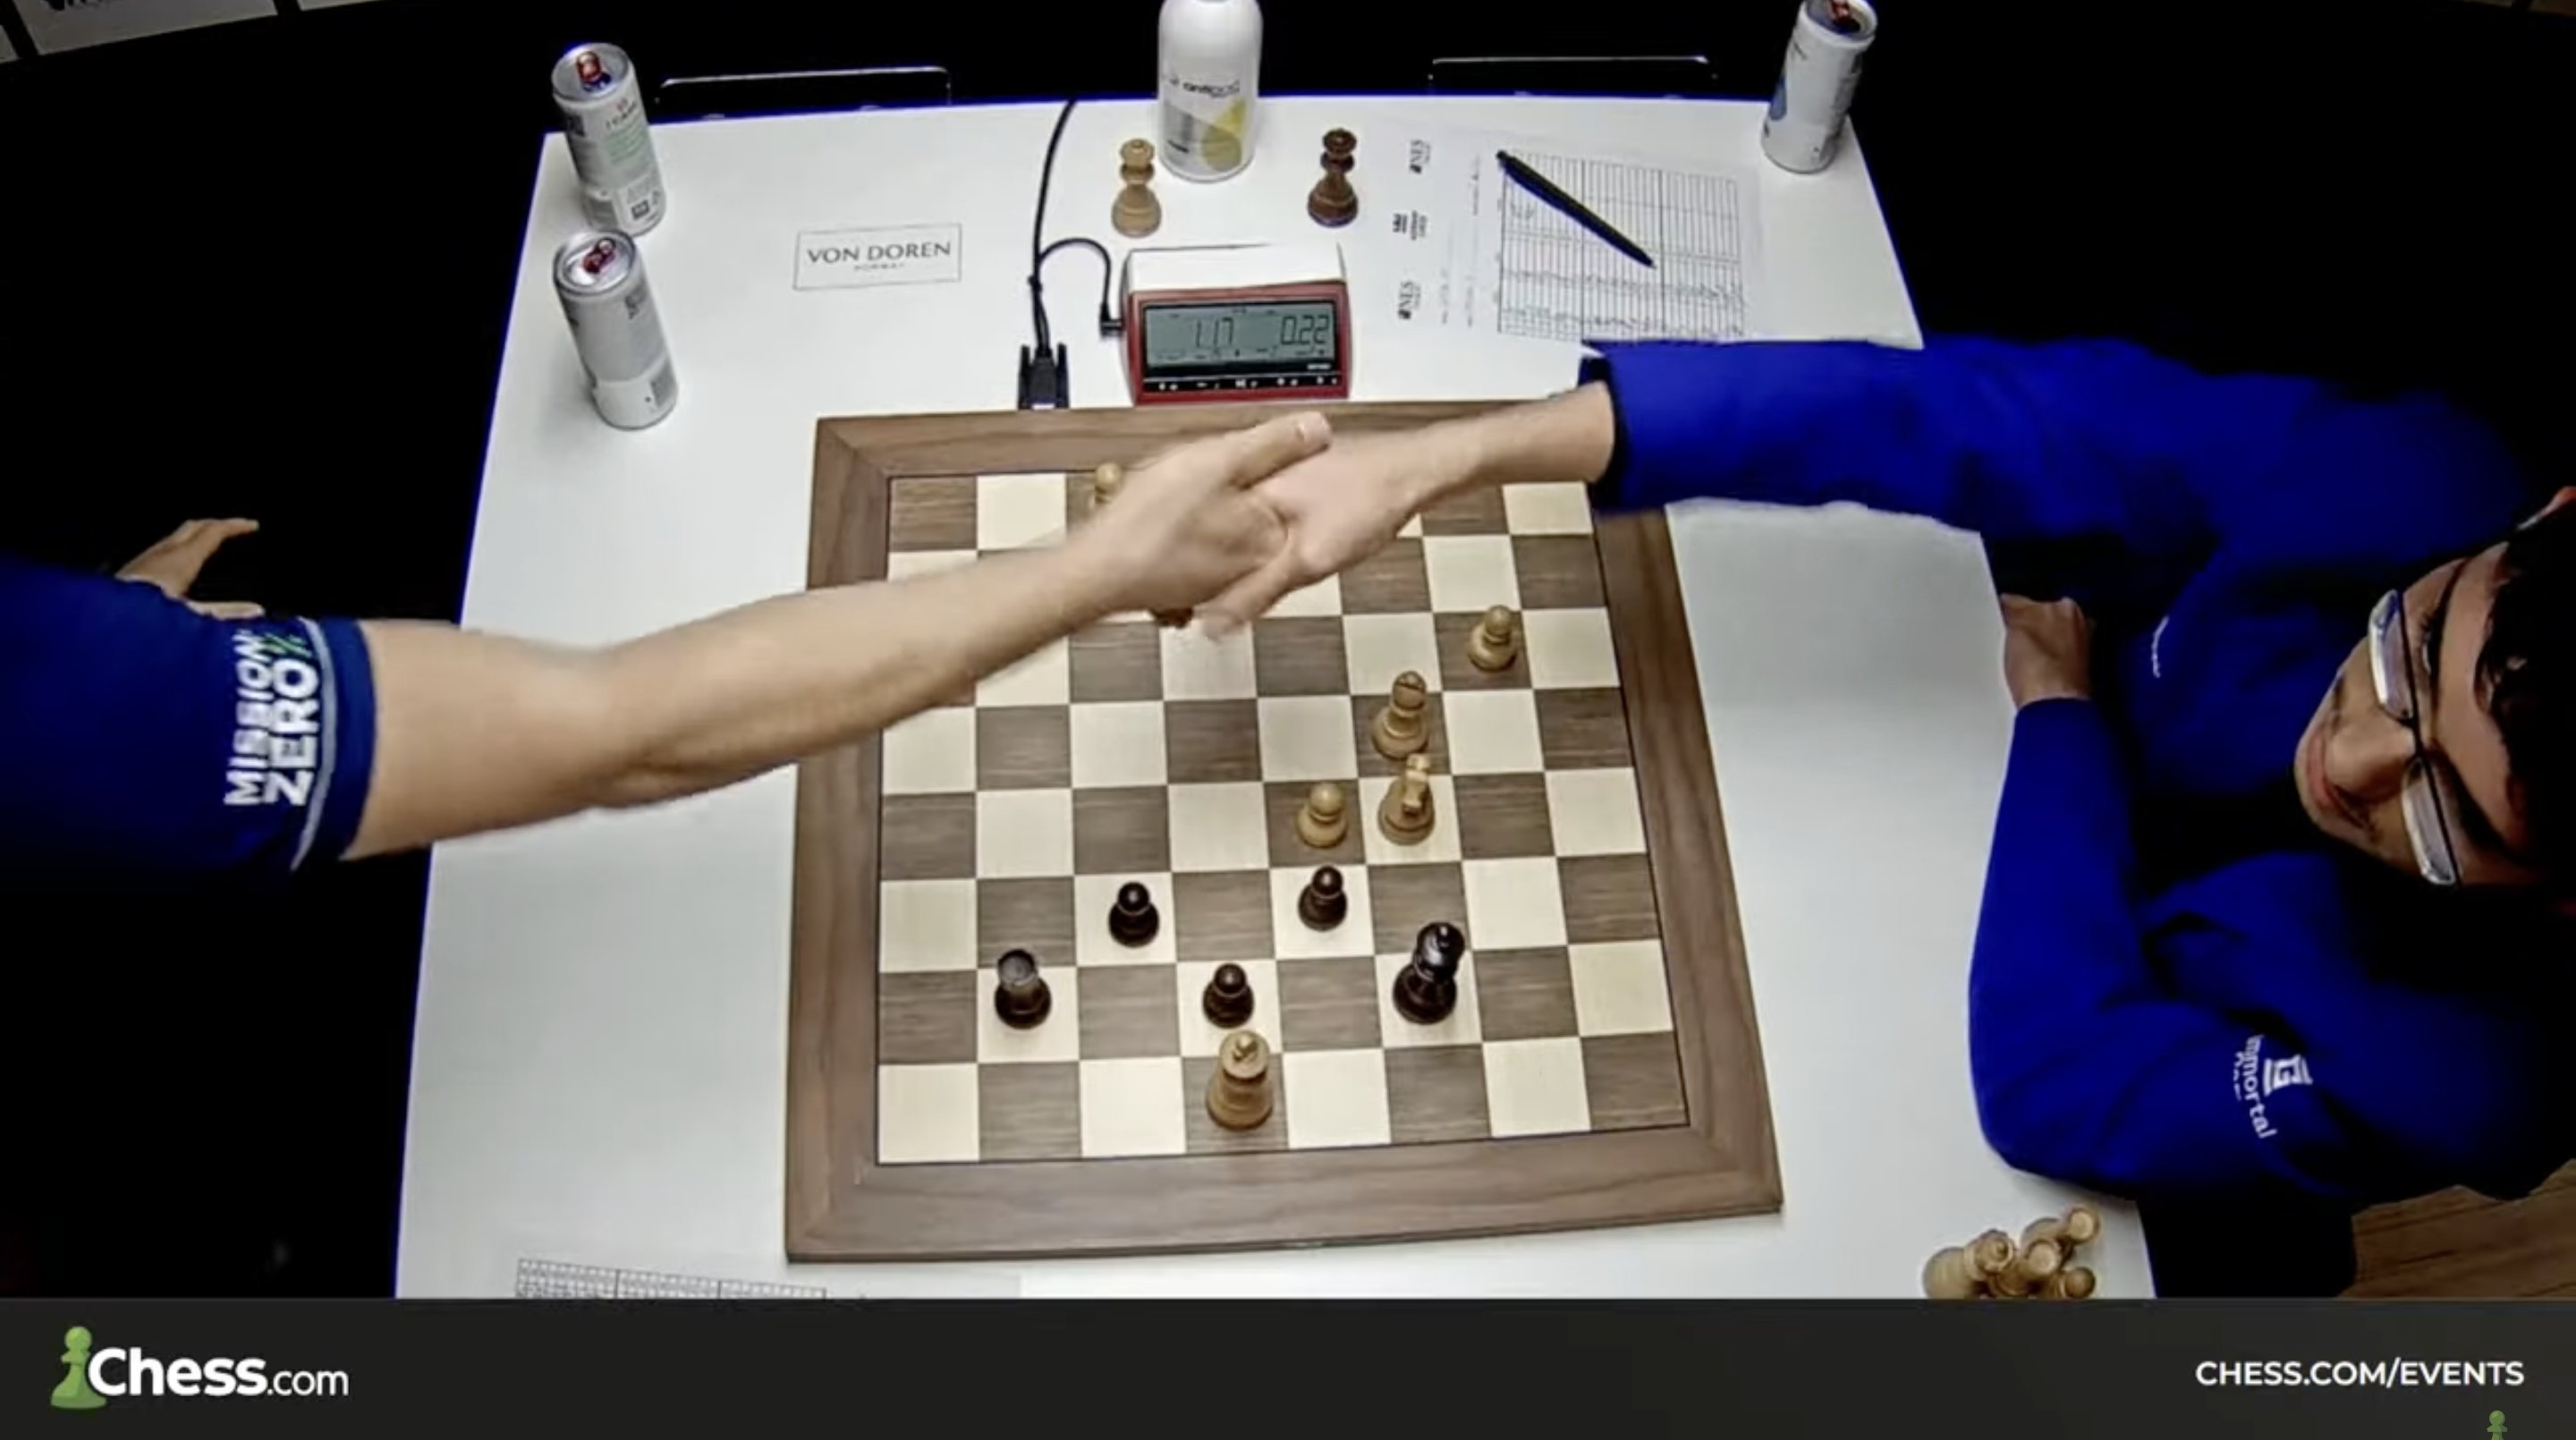 chess24.com on X: Both Magnus Carlsen and Alireza Firouzja missed